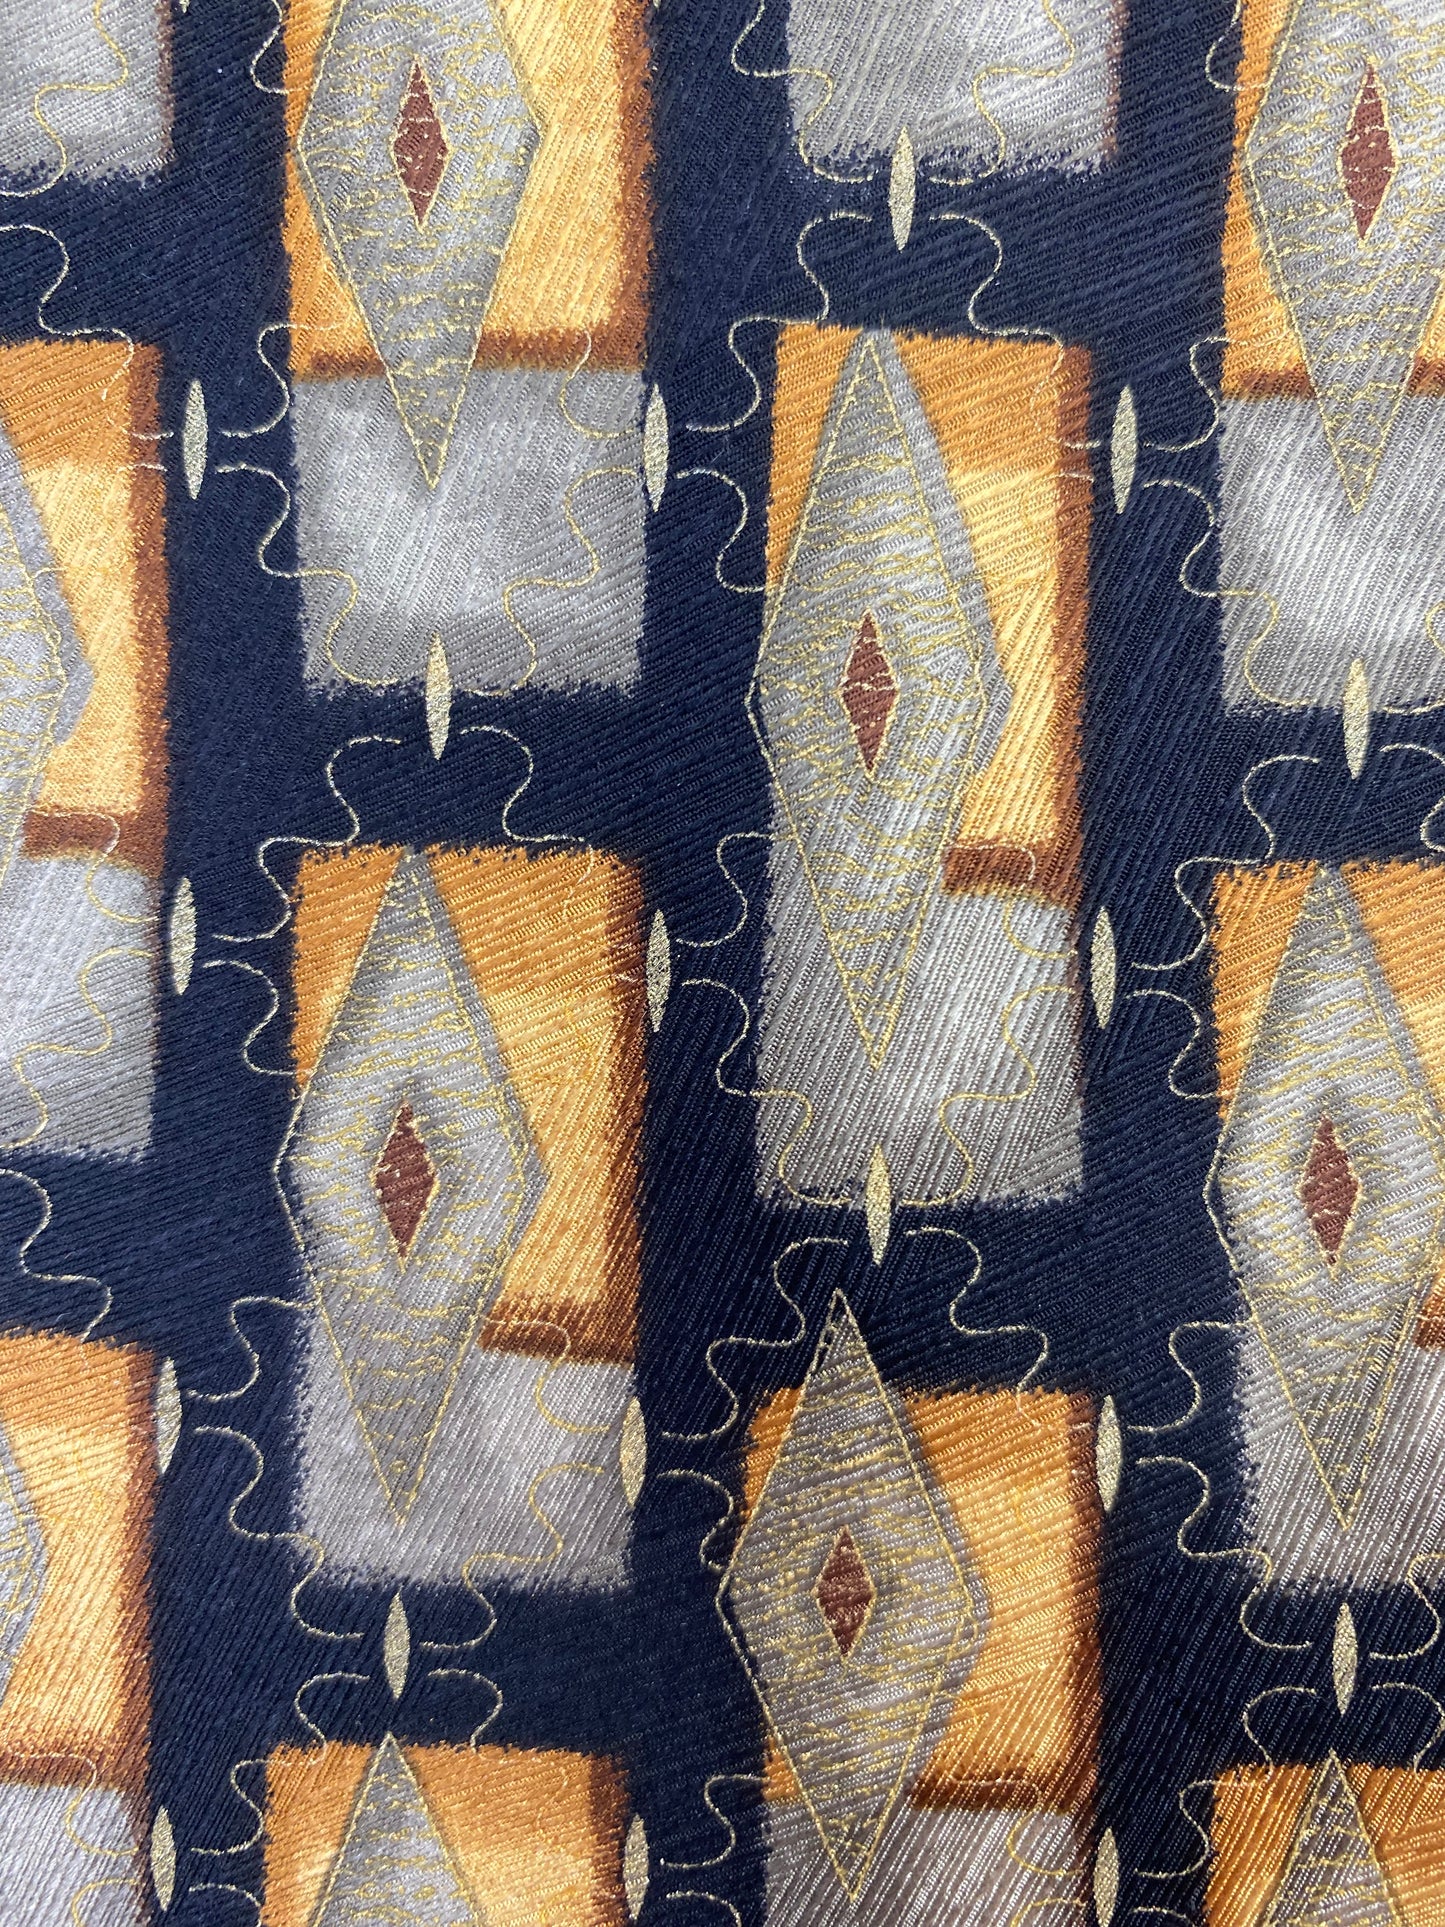 90s Deadstock Silk Necktie, Men's Vintage Gold/ Black Geometric Pattern Tie, NOS